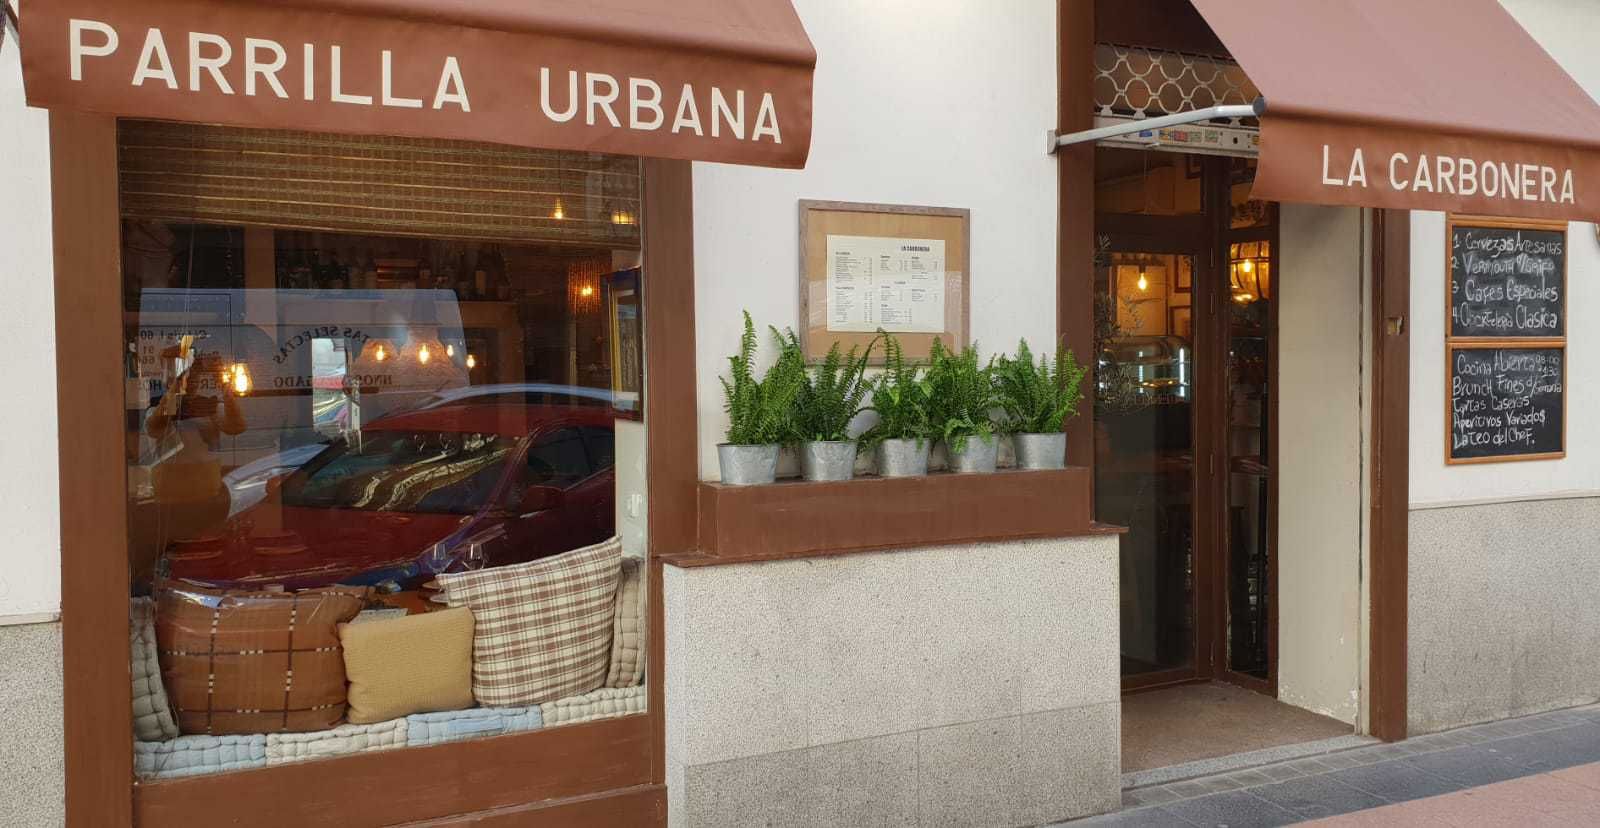 La Carbonera: parrilla urbana en pleno Barrio de Salamanca